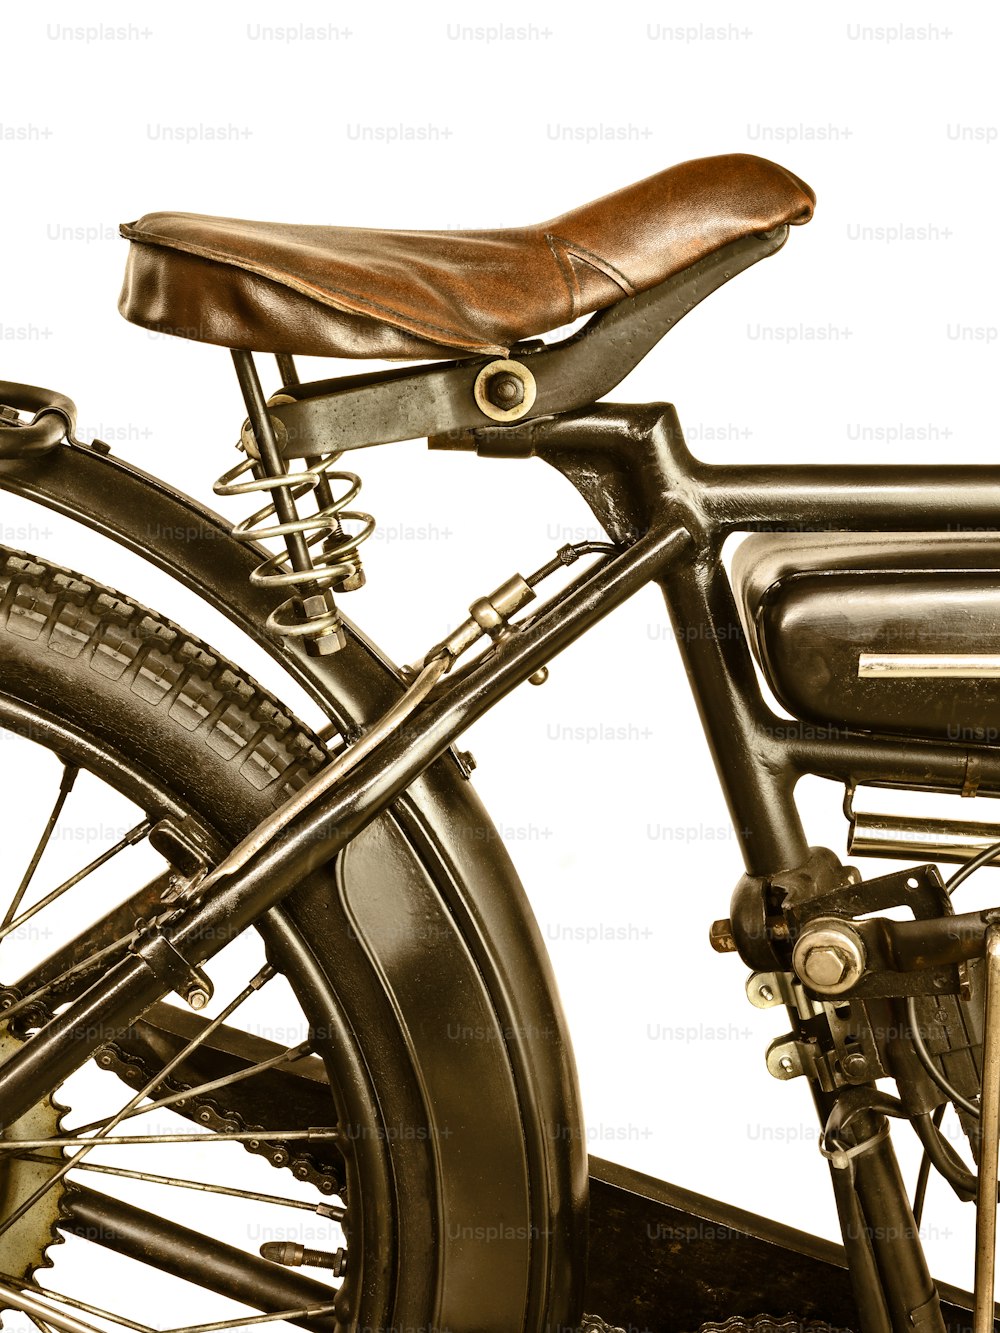 Retro styled image of a motorcycle saddle isolated on a white background